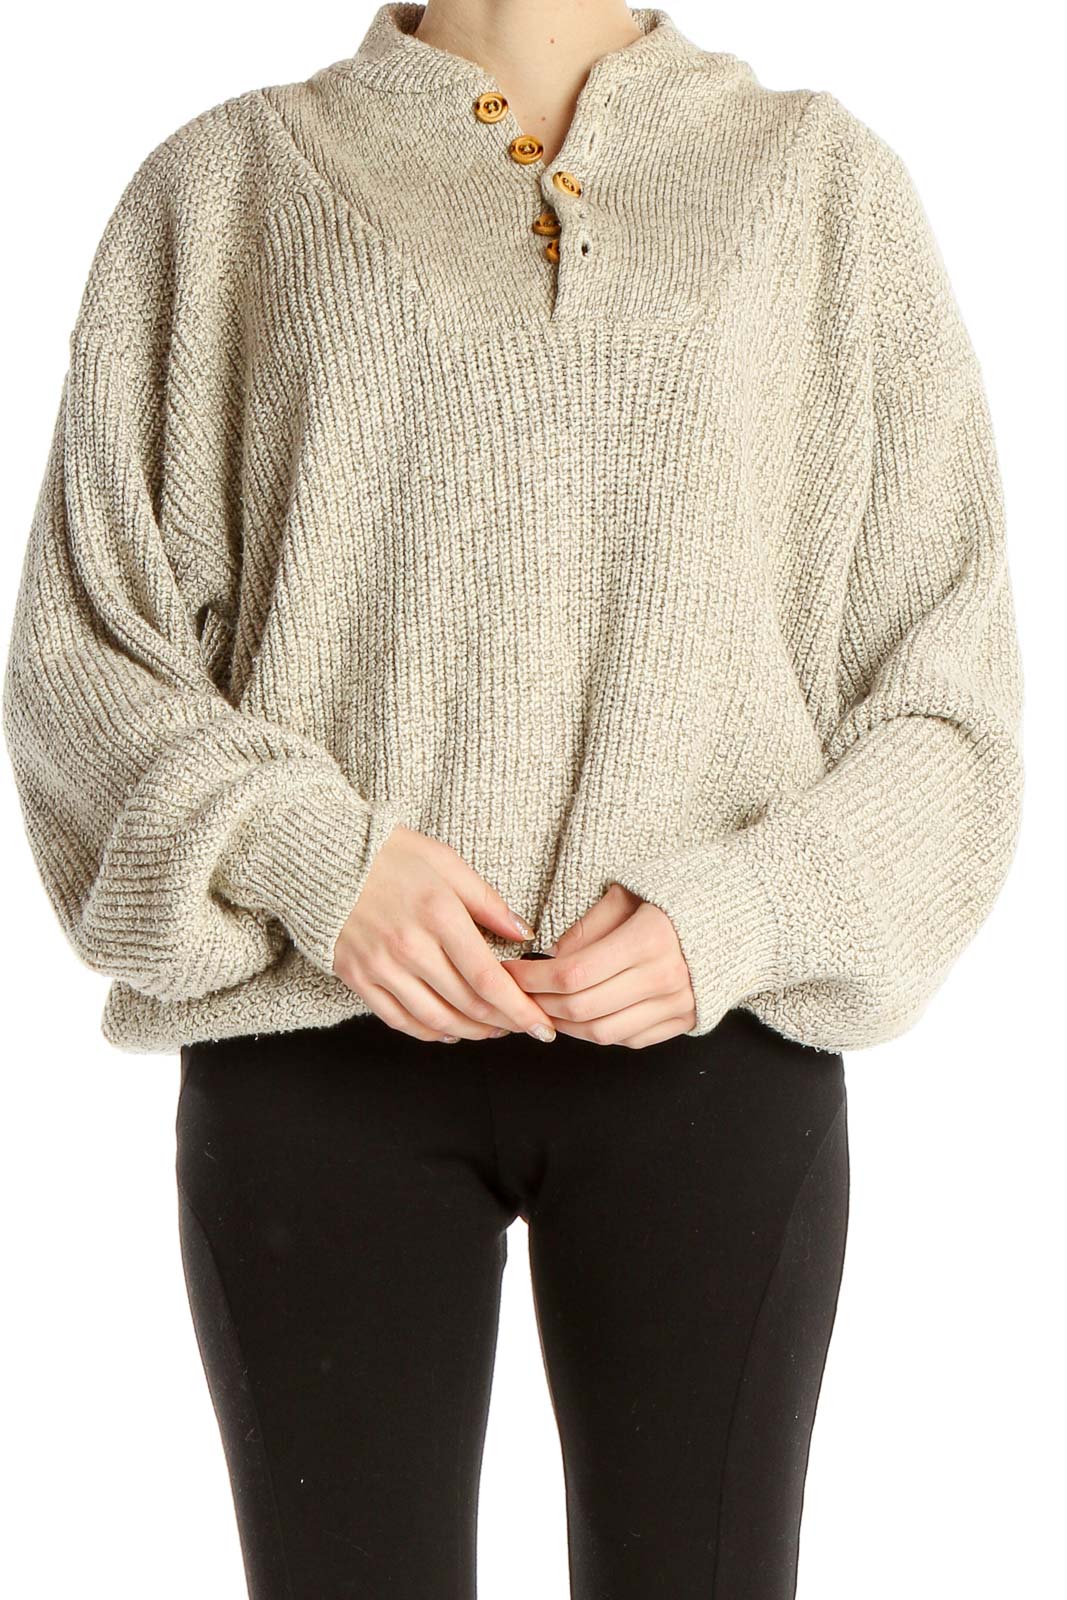 Beige Retro Sweater Front